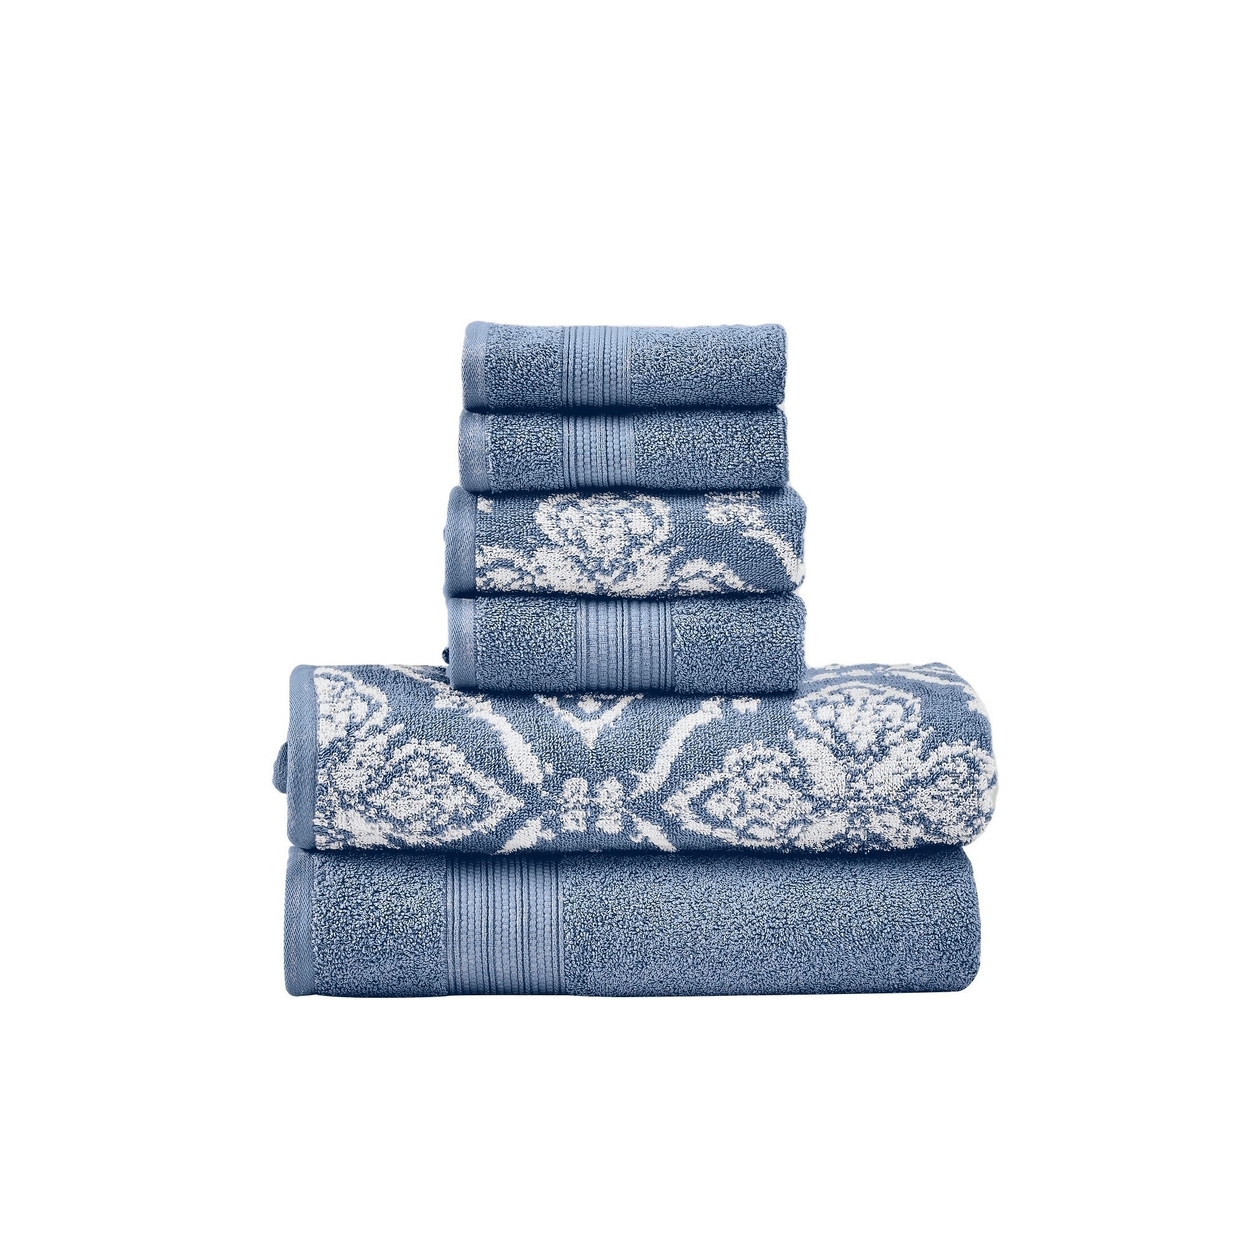 Naja 6pc Cotton Towel Set, Jacquard Pattern, White, Blue By The Urban Port- Saltoro Sherpi